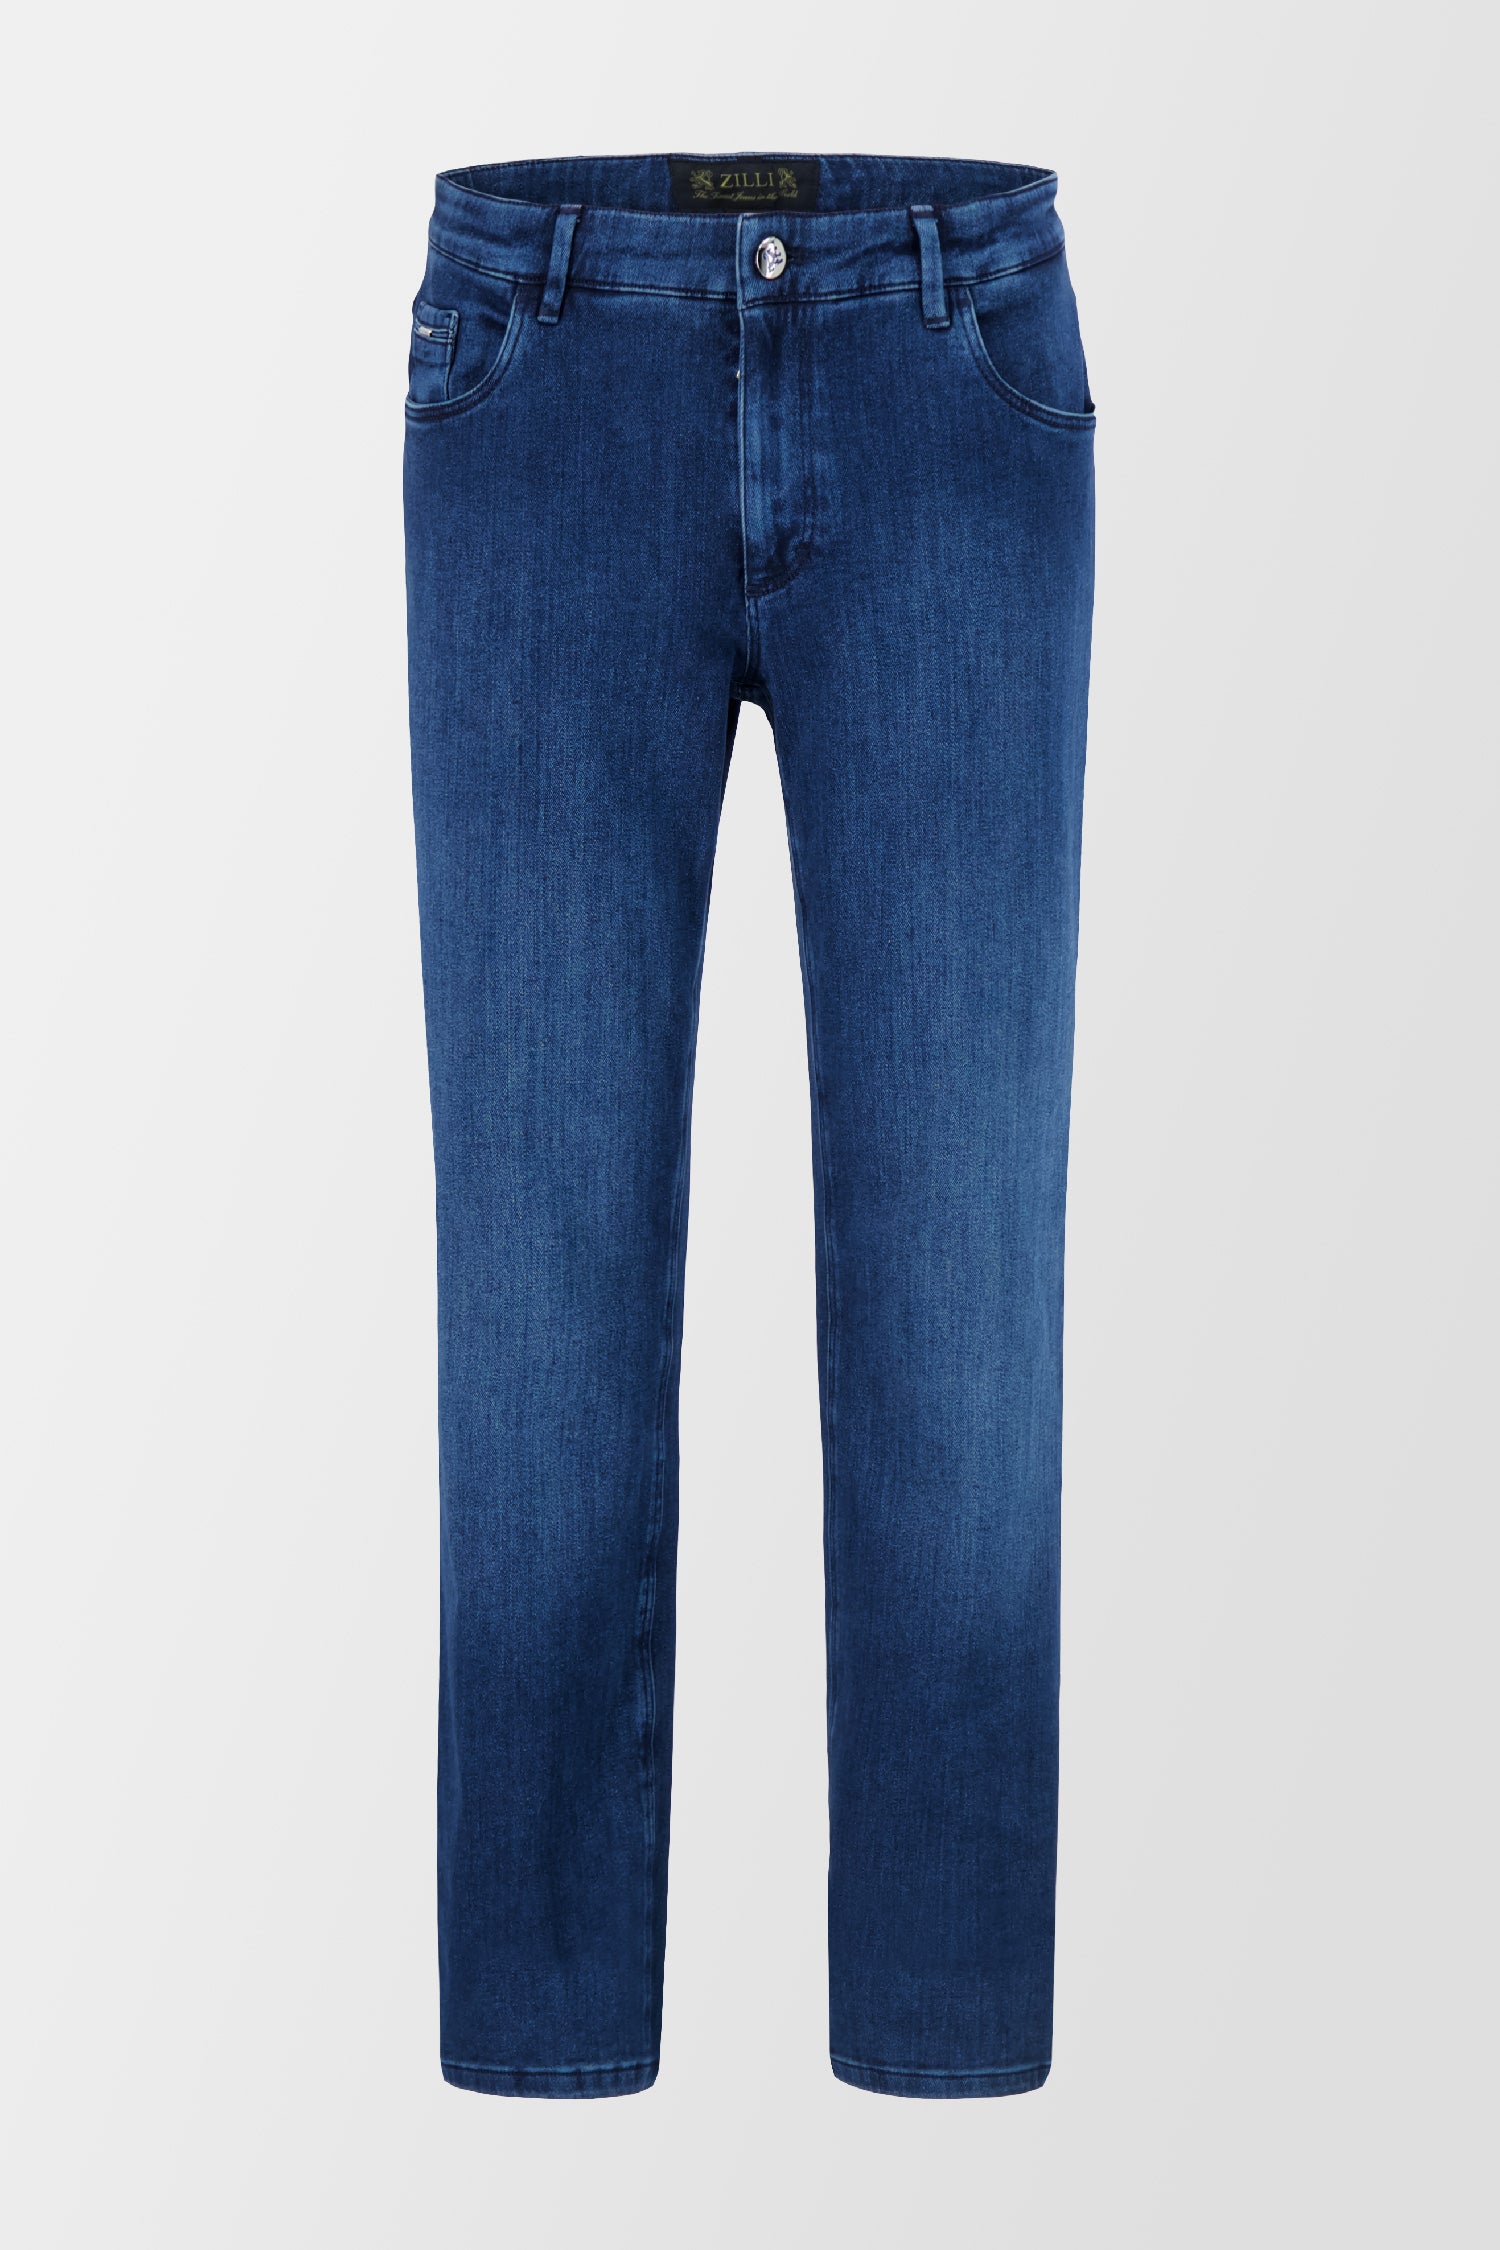 Zilli Blue Classic Jeans